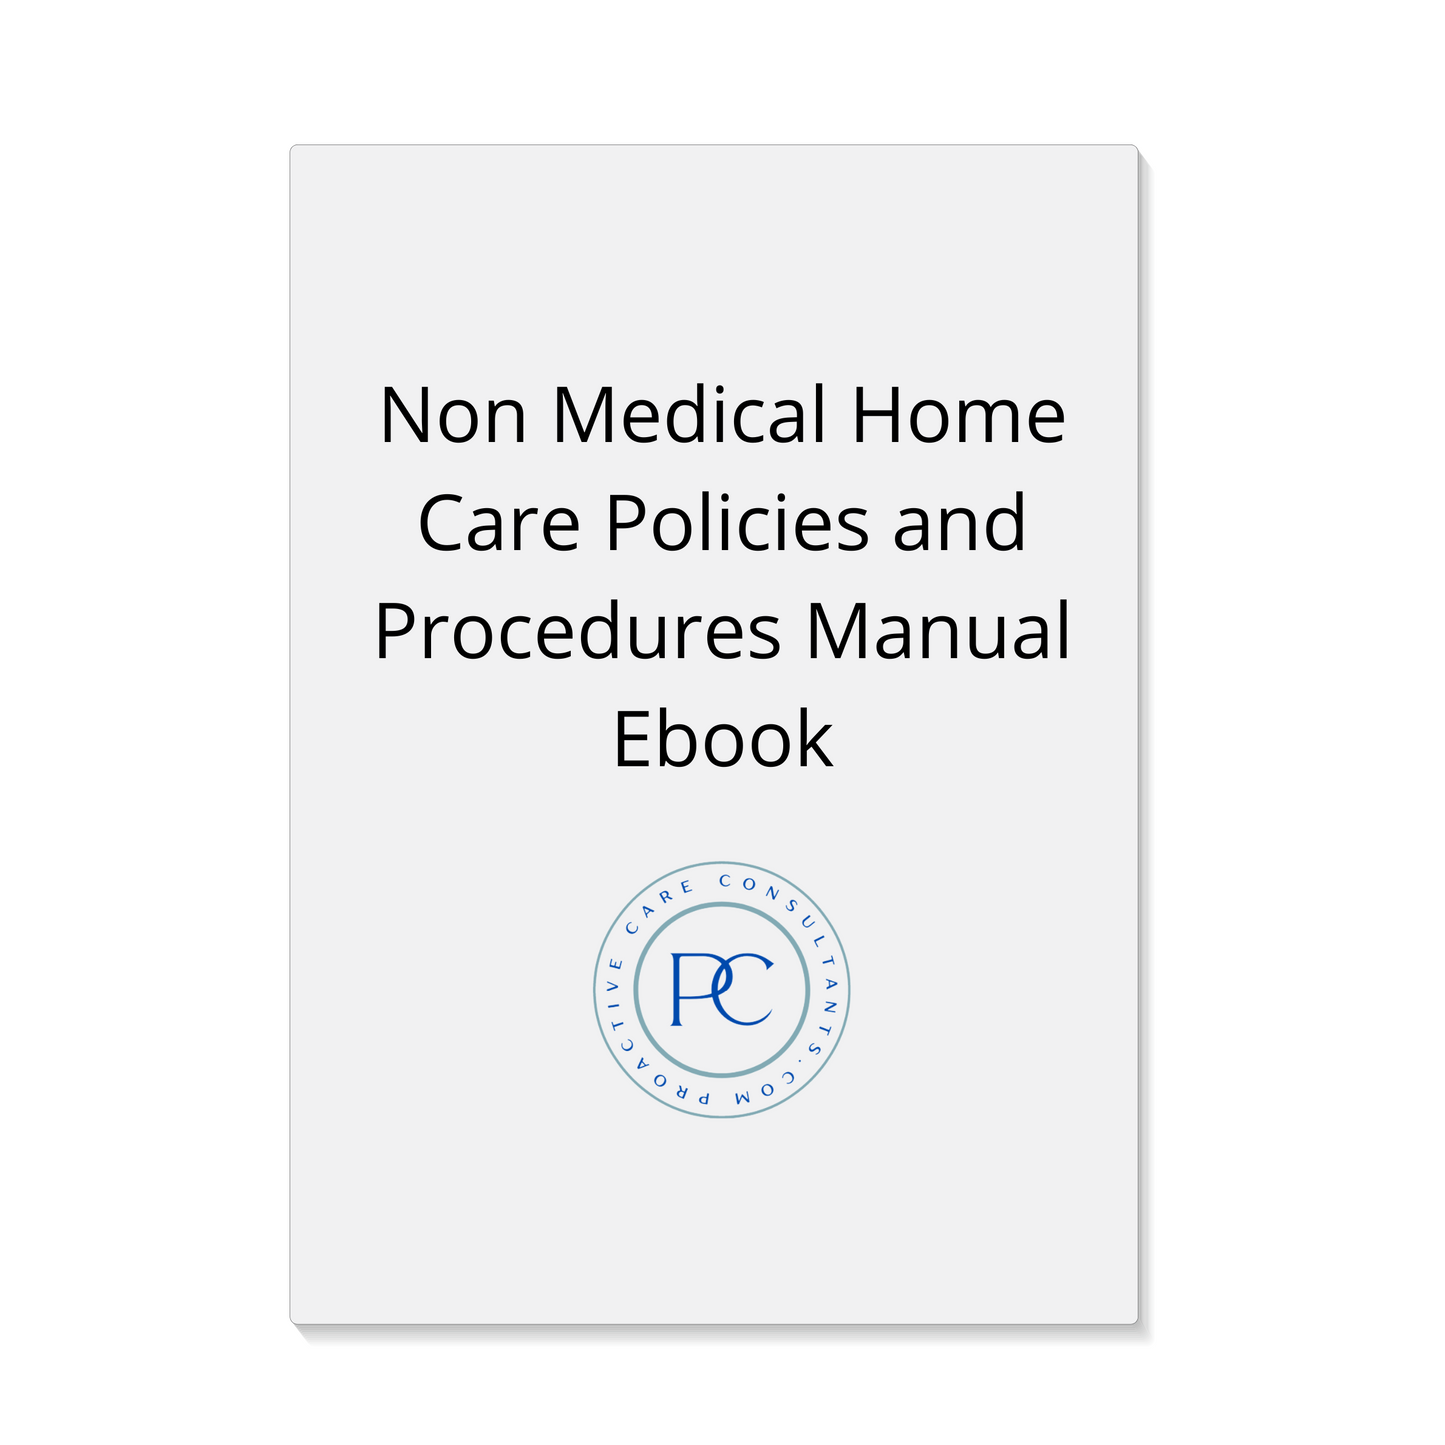 NON-Medical Home Care Policy & Procedure Manual eBook